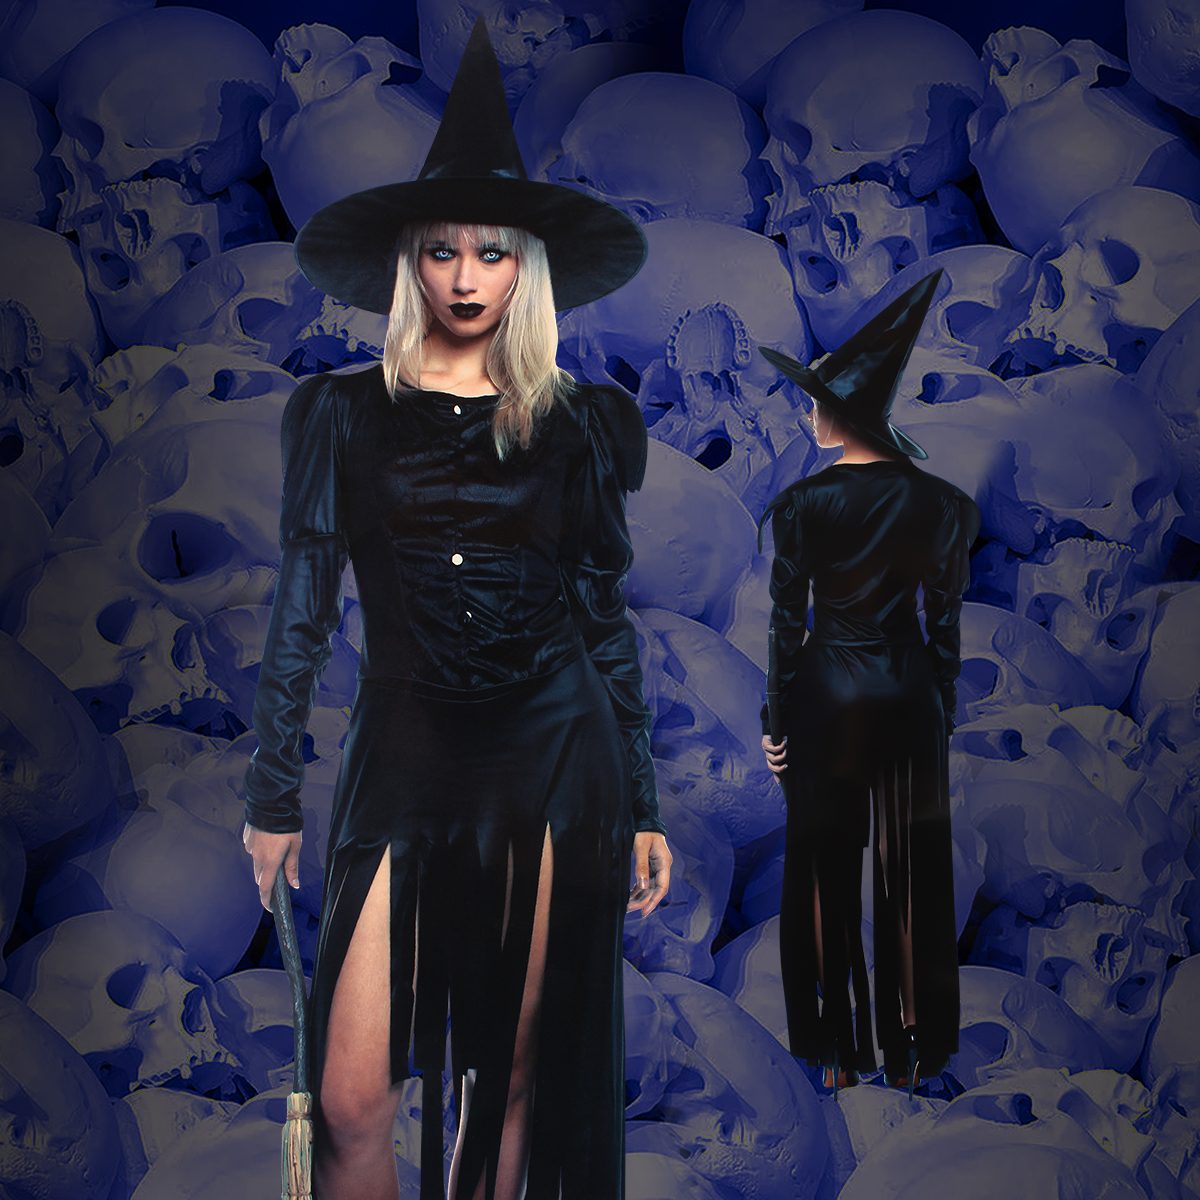 Cosplay Horror Zombie Witch Girls Dress Halloween Vampire Costume